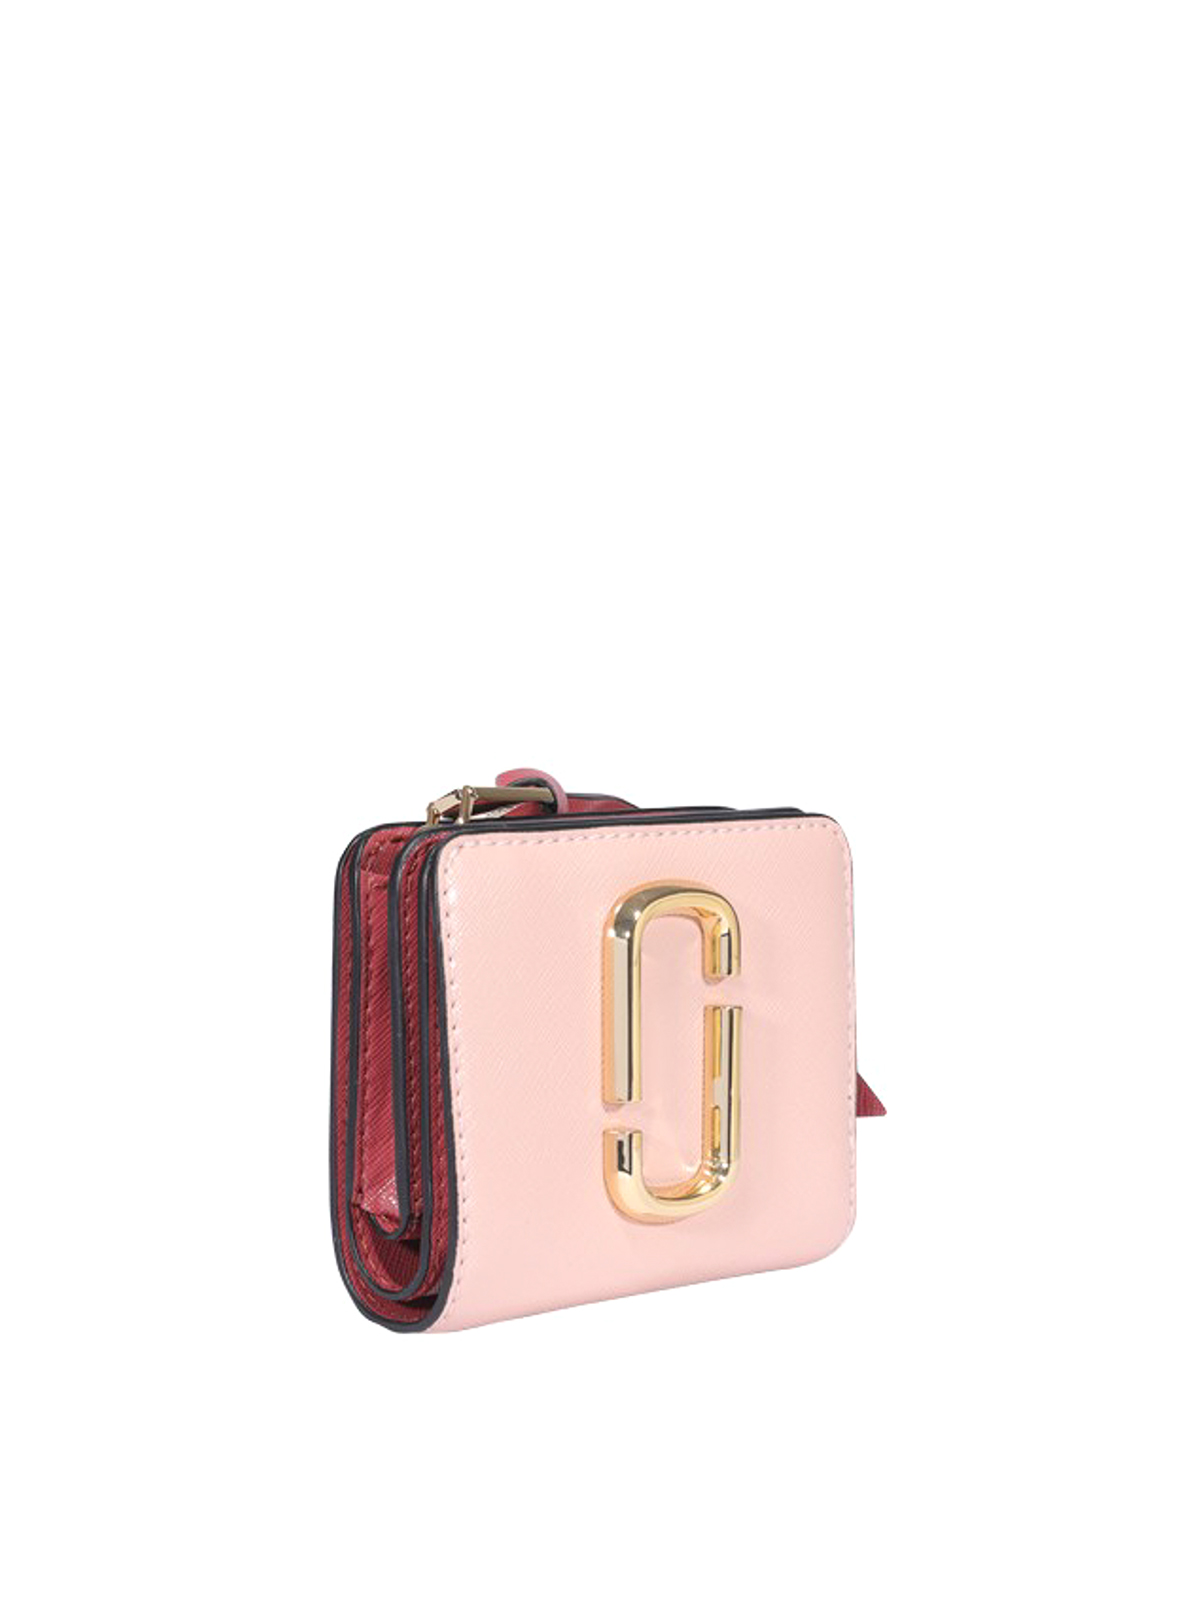 Marc Jacobs Snapshot Mini Compact Wallet- Black/ Multi M0014282-002  191267441153 - Handbags - Jomashop